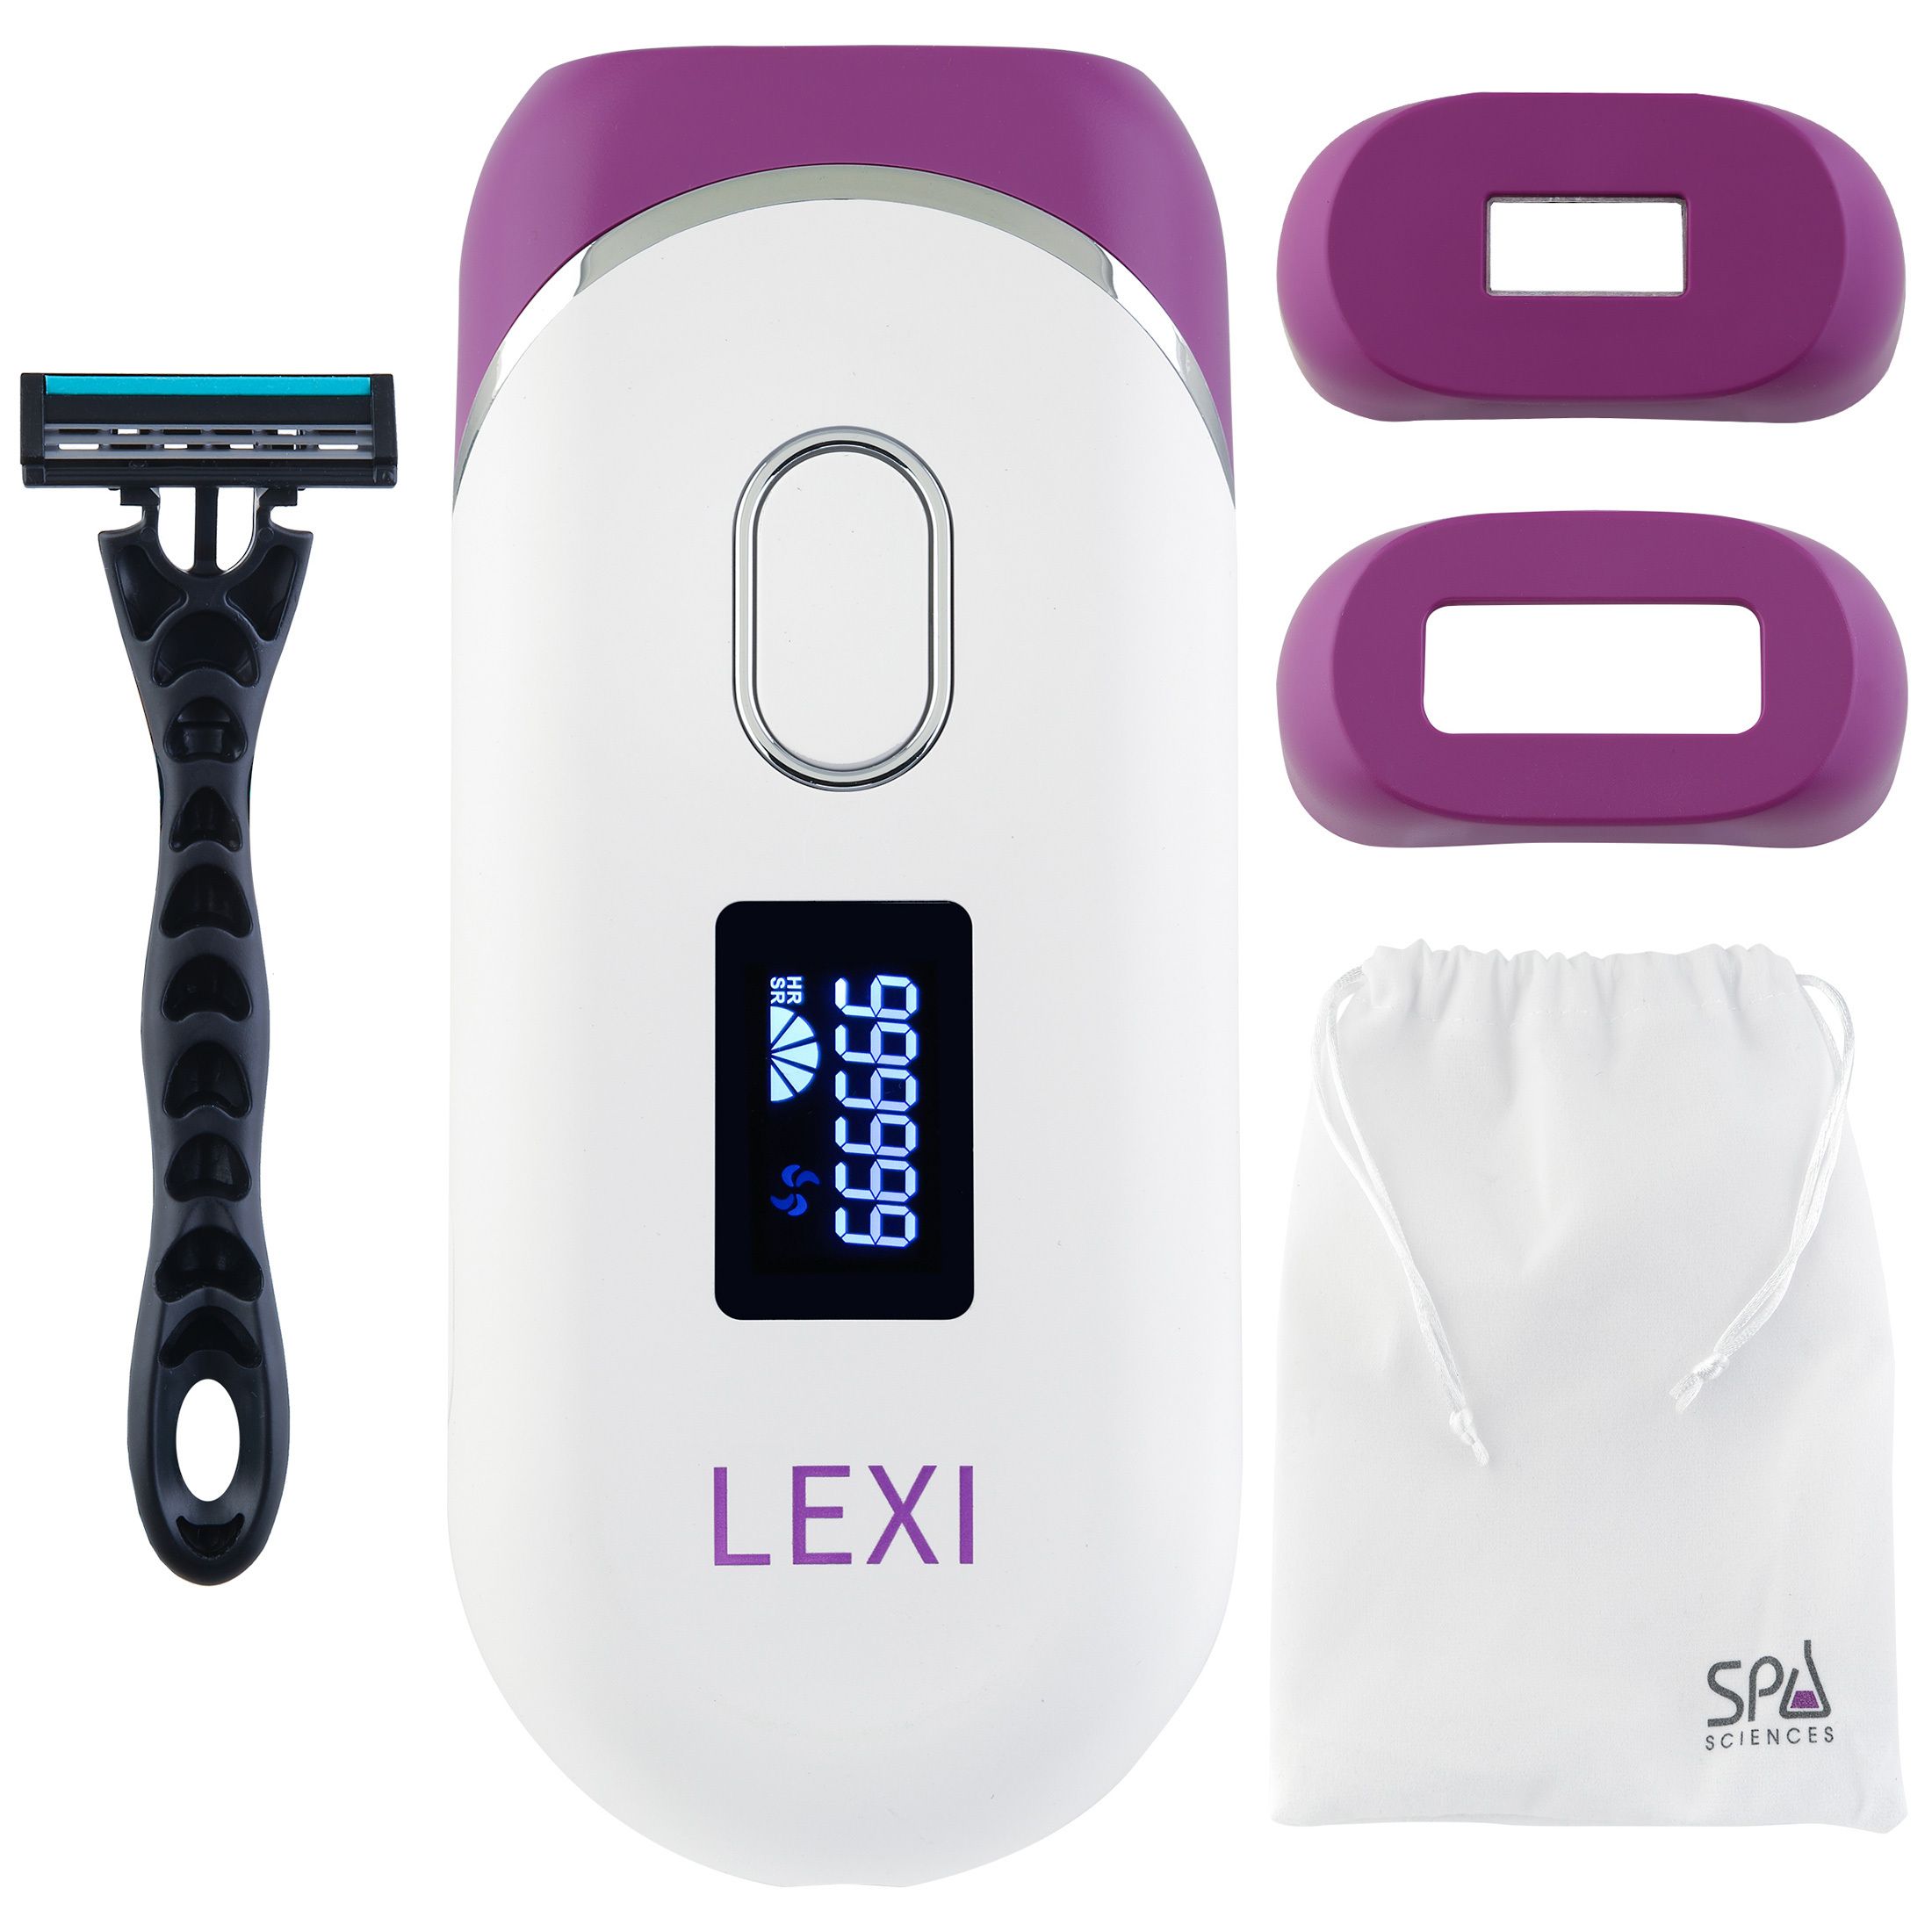 Spa Sciences LEXI IPL hair removal